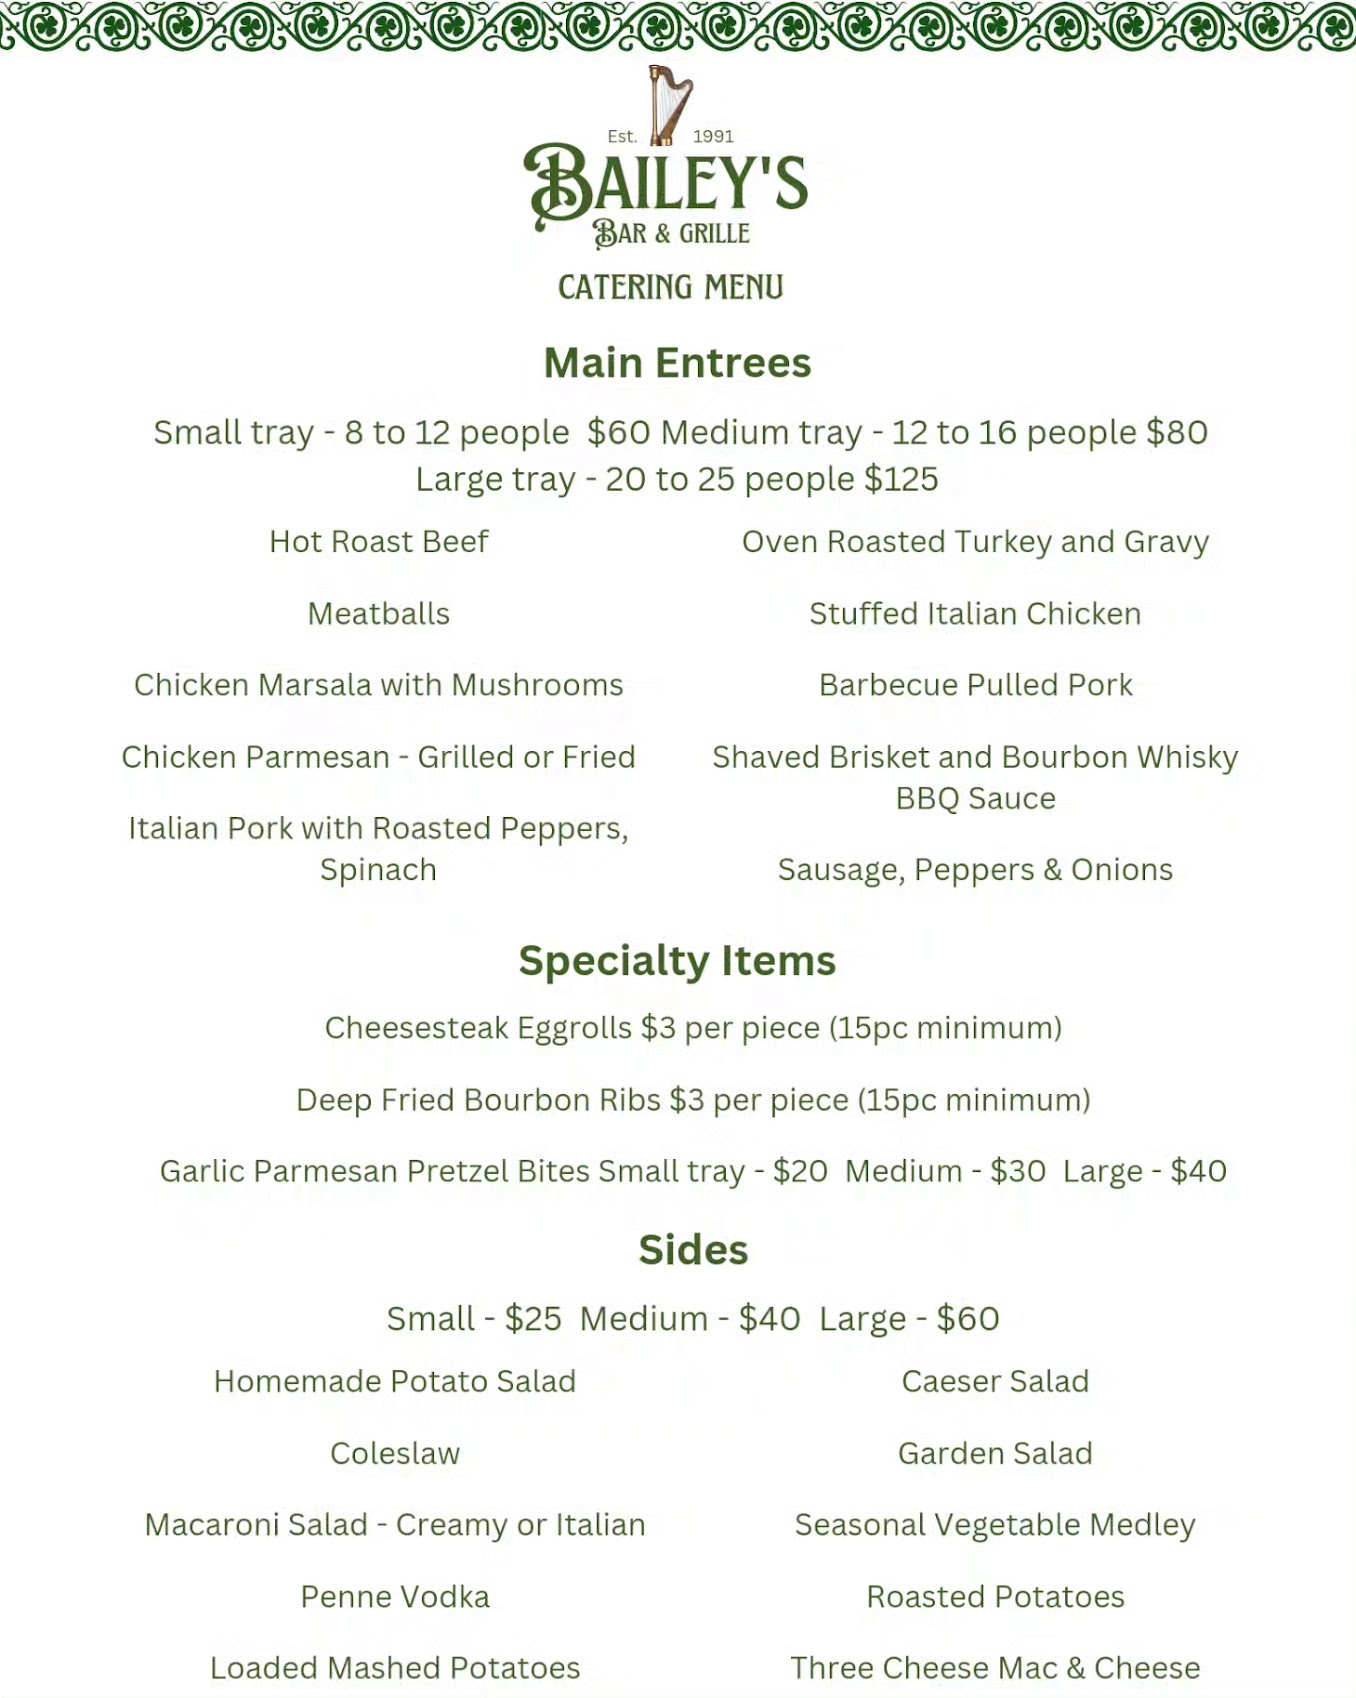 Bailey's restaurant menu.